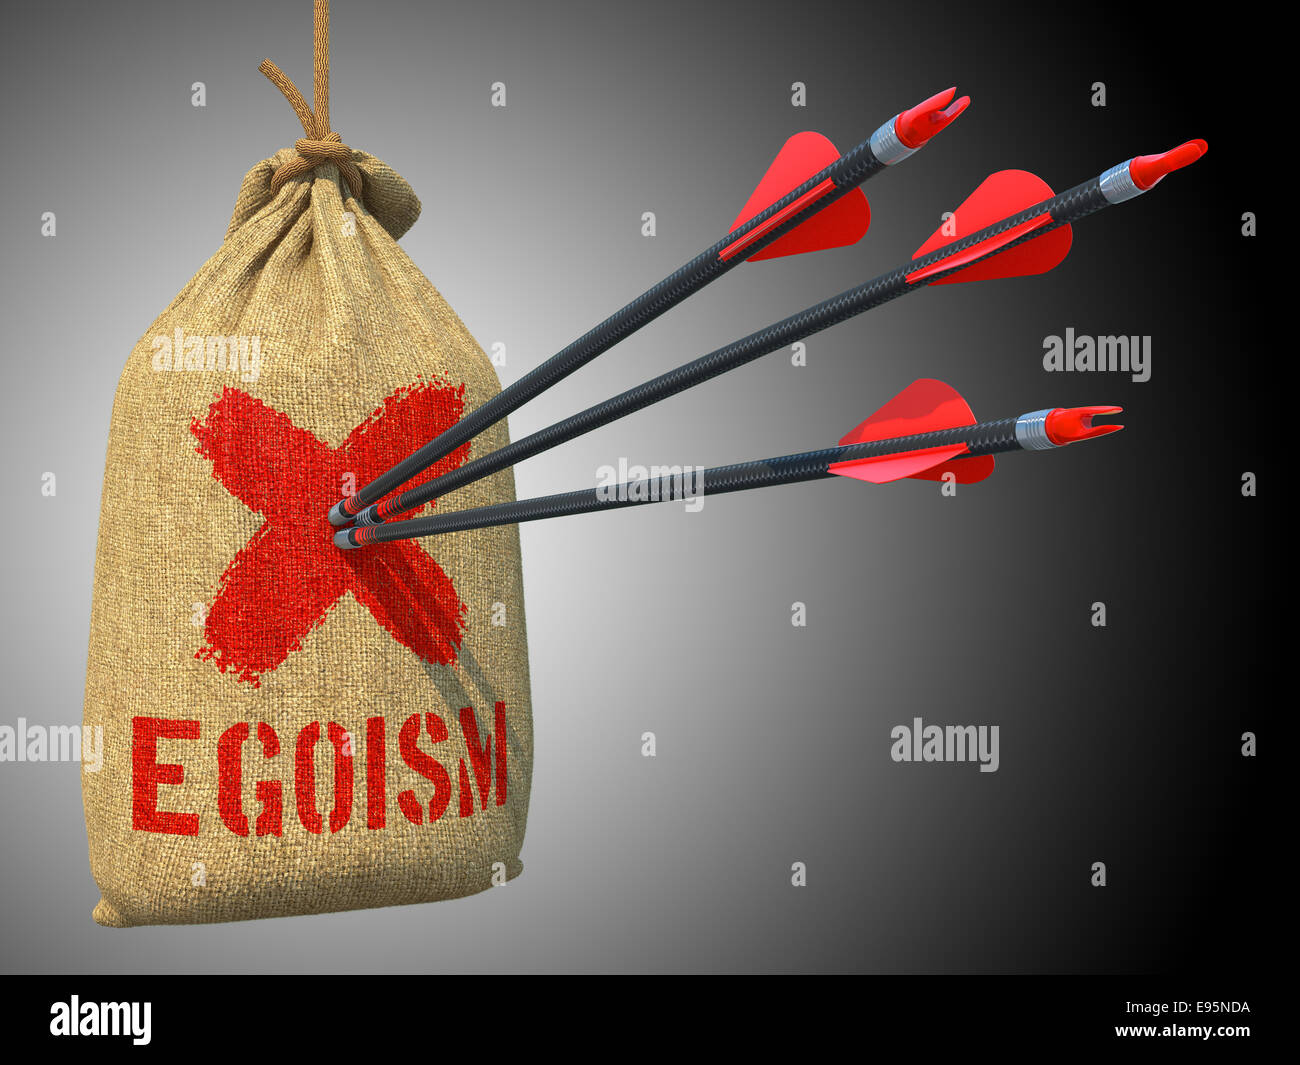 Egoism - Arrows Hit in Red Mark Target. Stock Photo